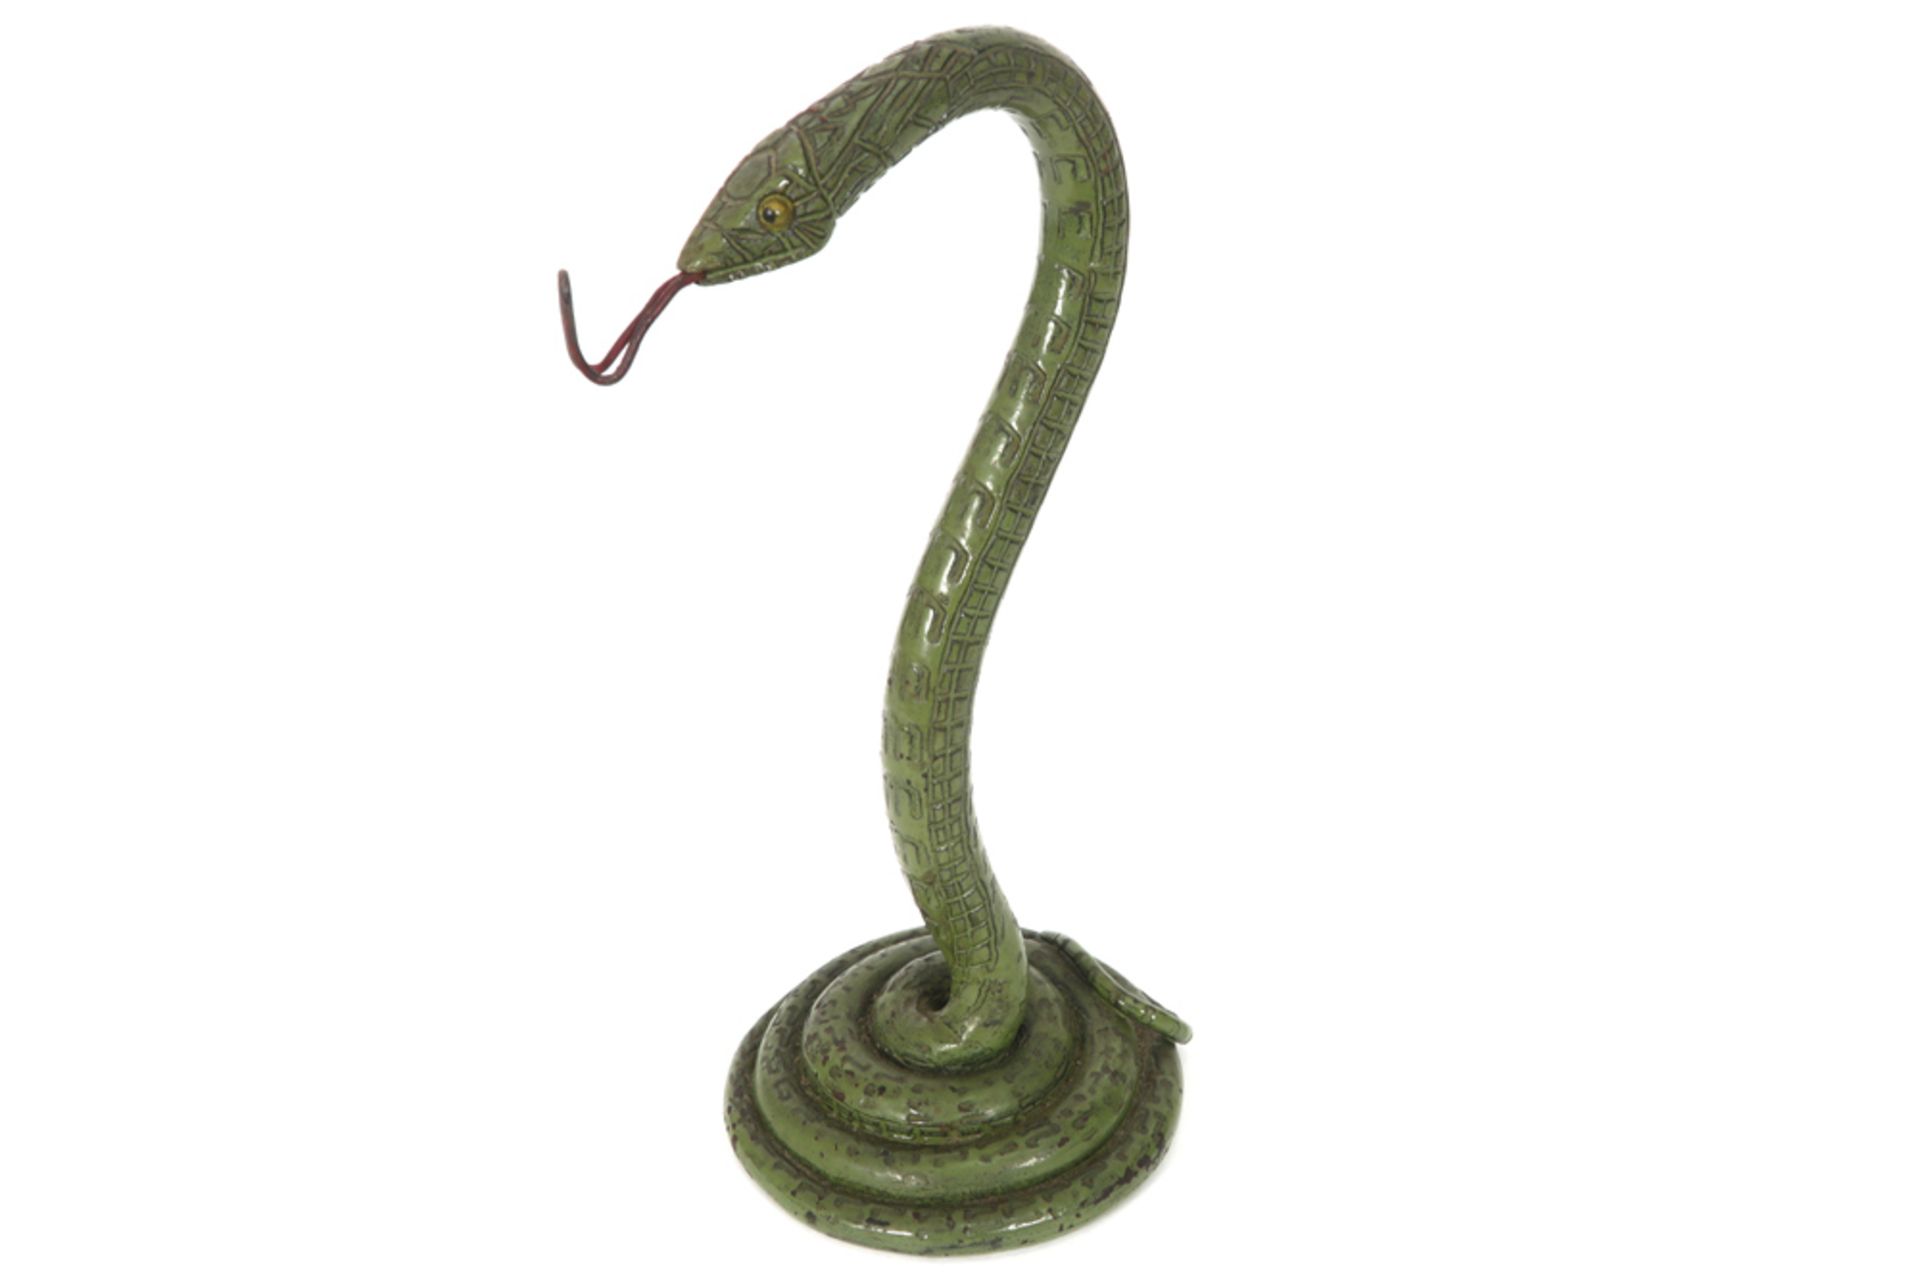 20th Cent. snake-shaped pocket watch stand in coldpainted bronze || Standaard voor een zakhorloge in - Image 2 of 2